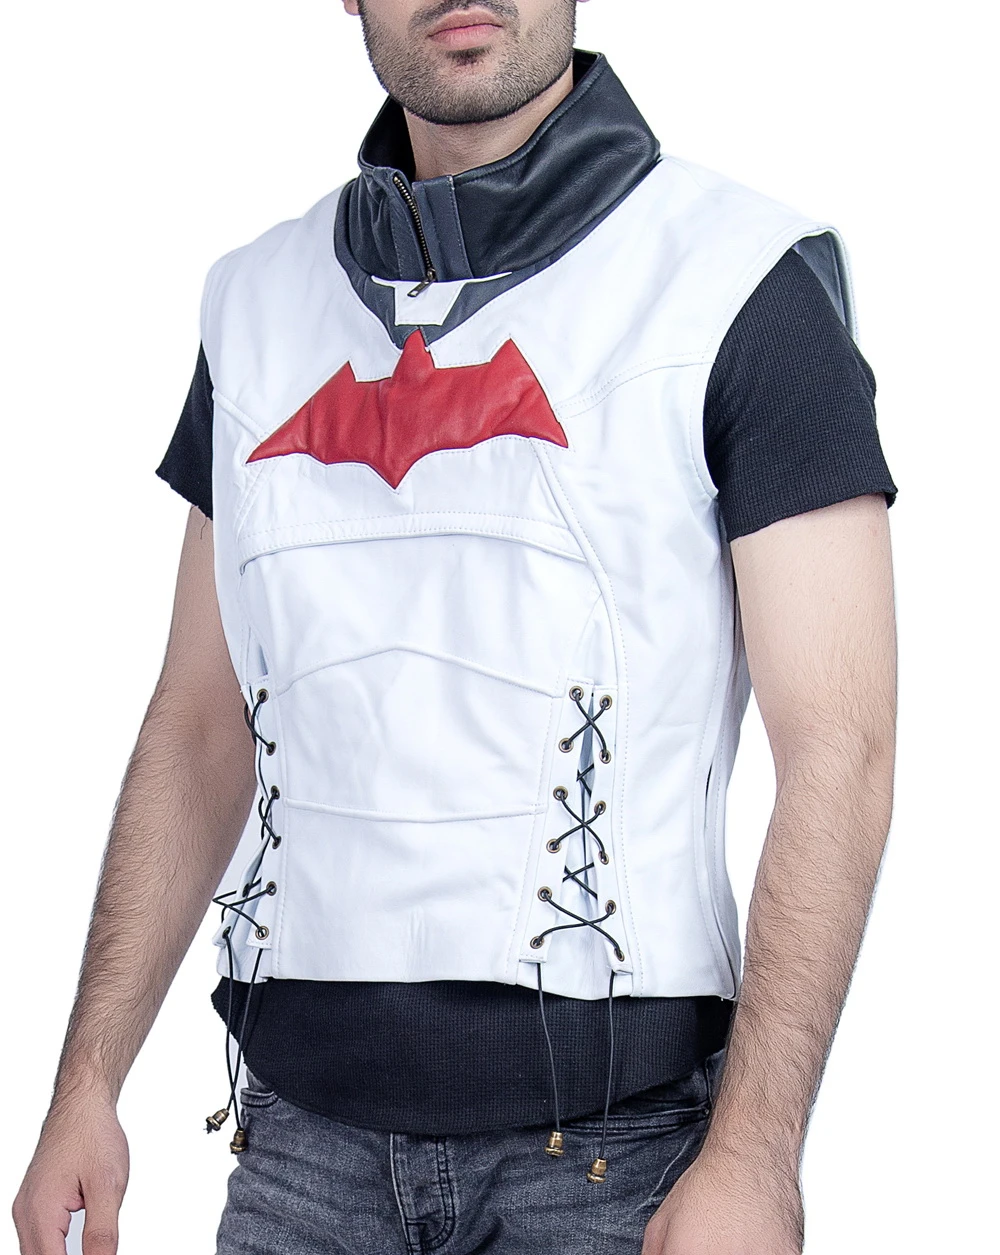 Batman vest | Dark knight batman leather vest